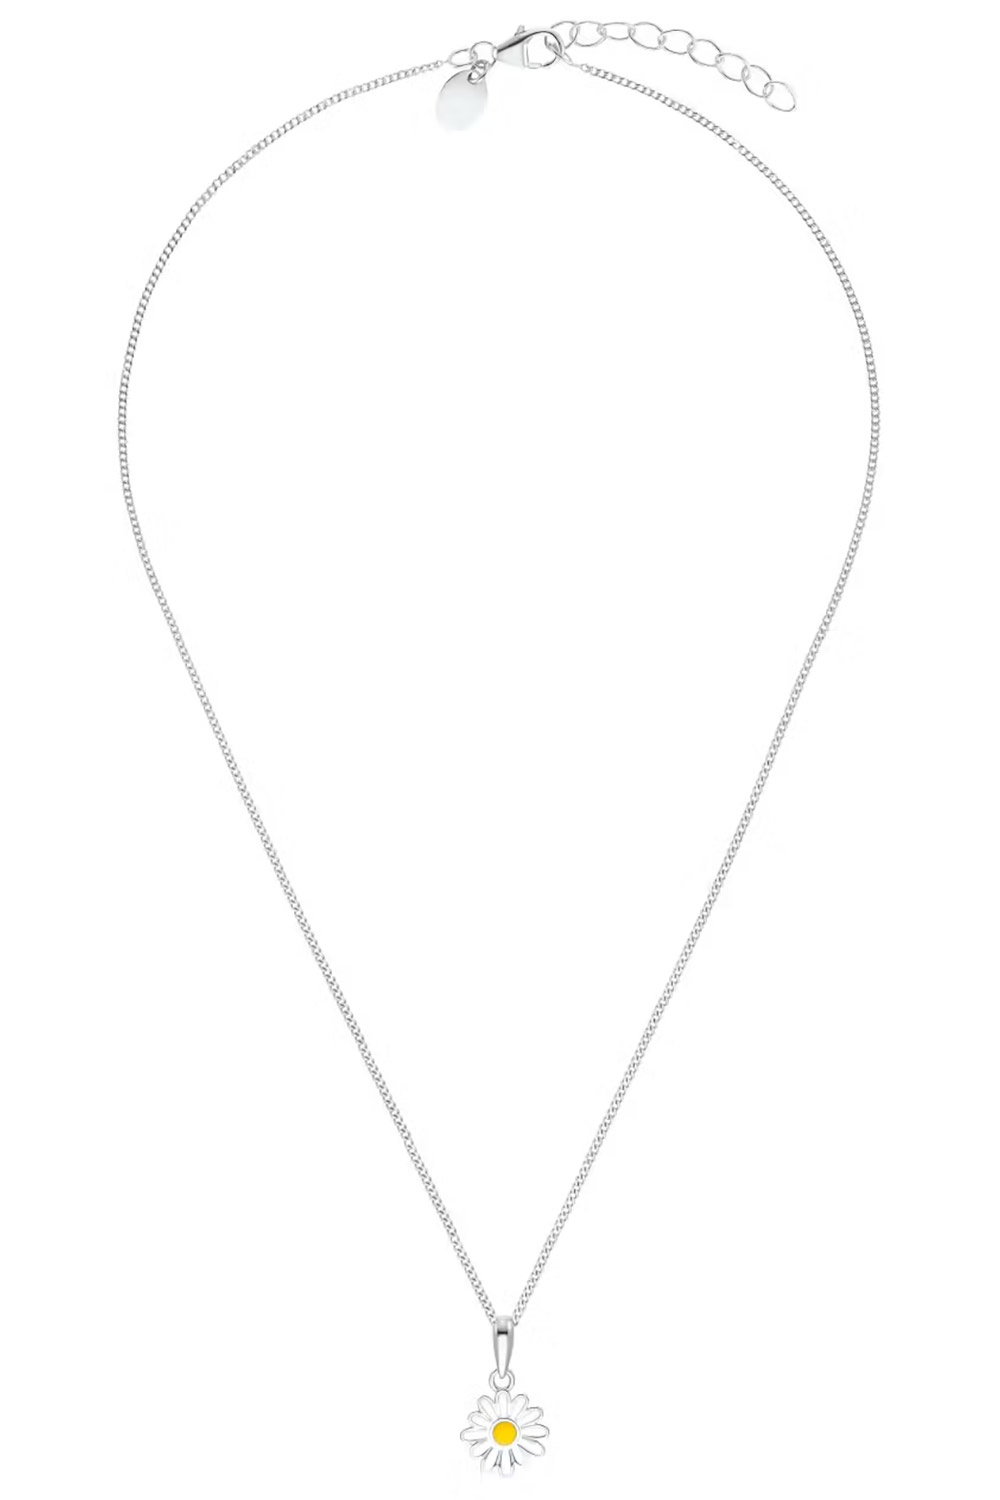 Prinzessin Lillifee Kinder-Halskette • Blume 2036039 mit uhrcenter Silber